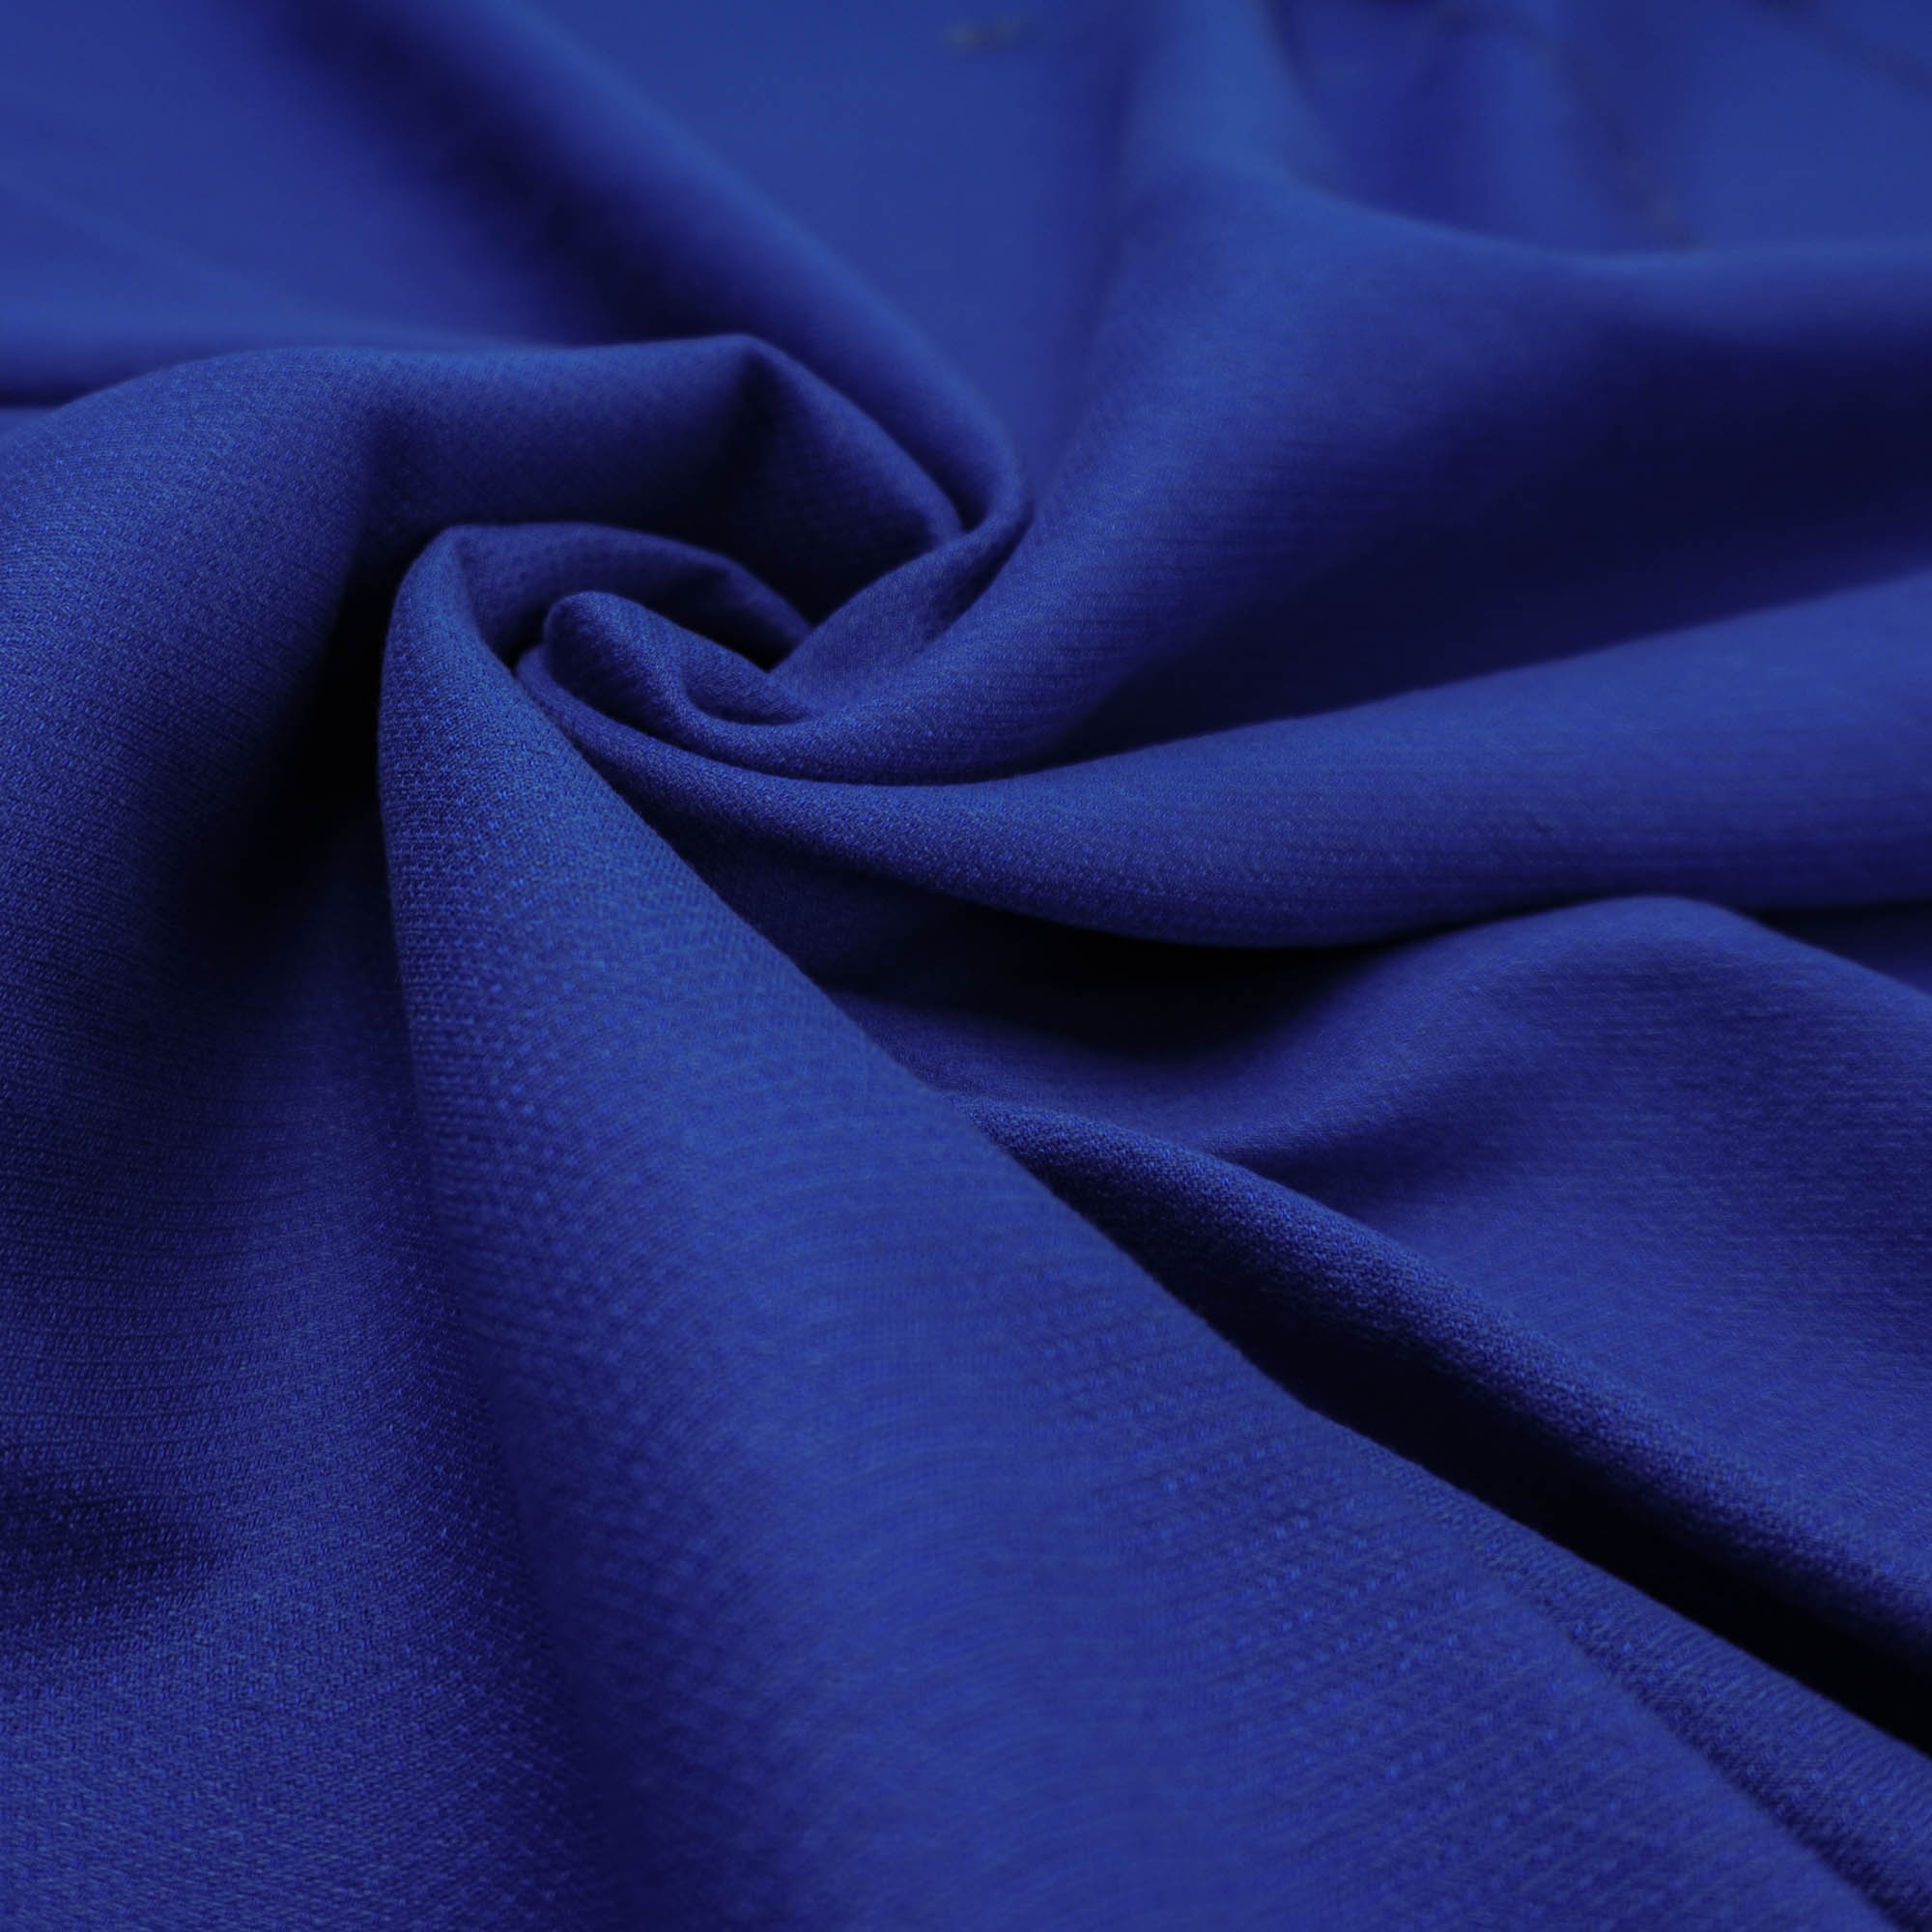 Tecido alfaiataria leve italiana azul royal (tecido italiano legítimo)